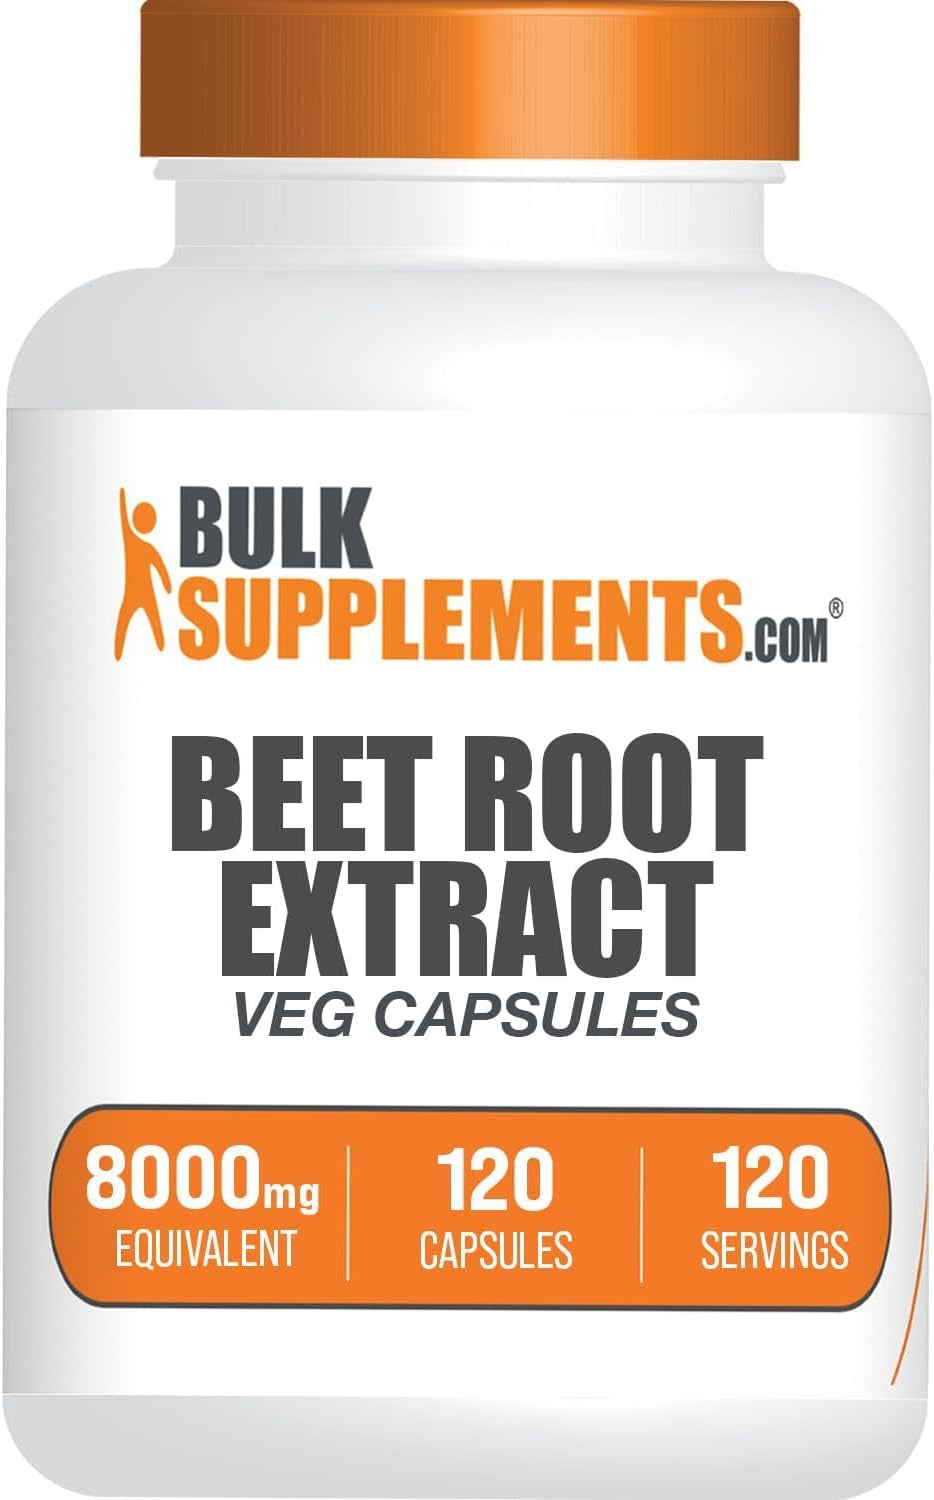 BULKSUPPLEMENTS.COM Beet Root Extract Capsules - Beet Root Supplements, Beet Root Capsules, Beet Root Pills - Vegan-Friendly, 8000Mg Equivalent, 1 Capsule per Serving, 120 Veg Capsules